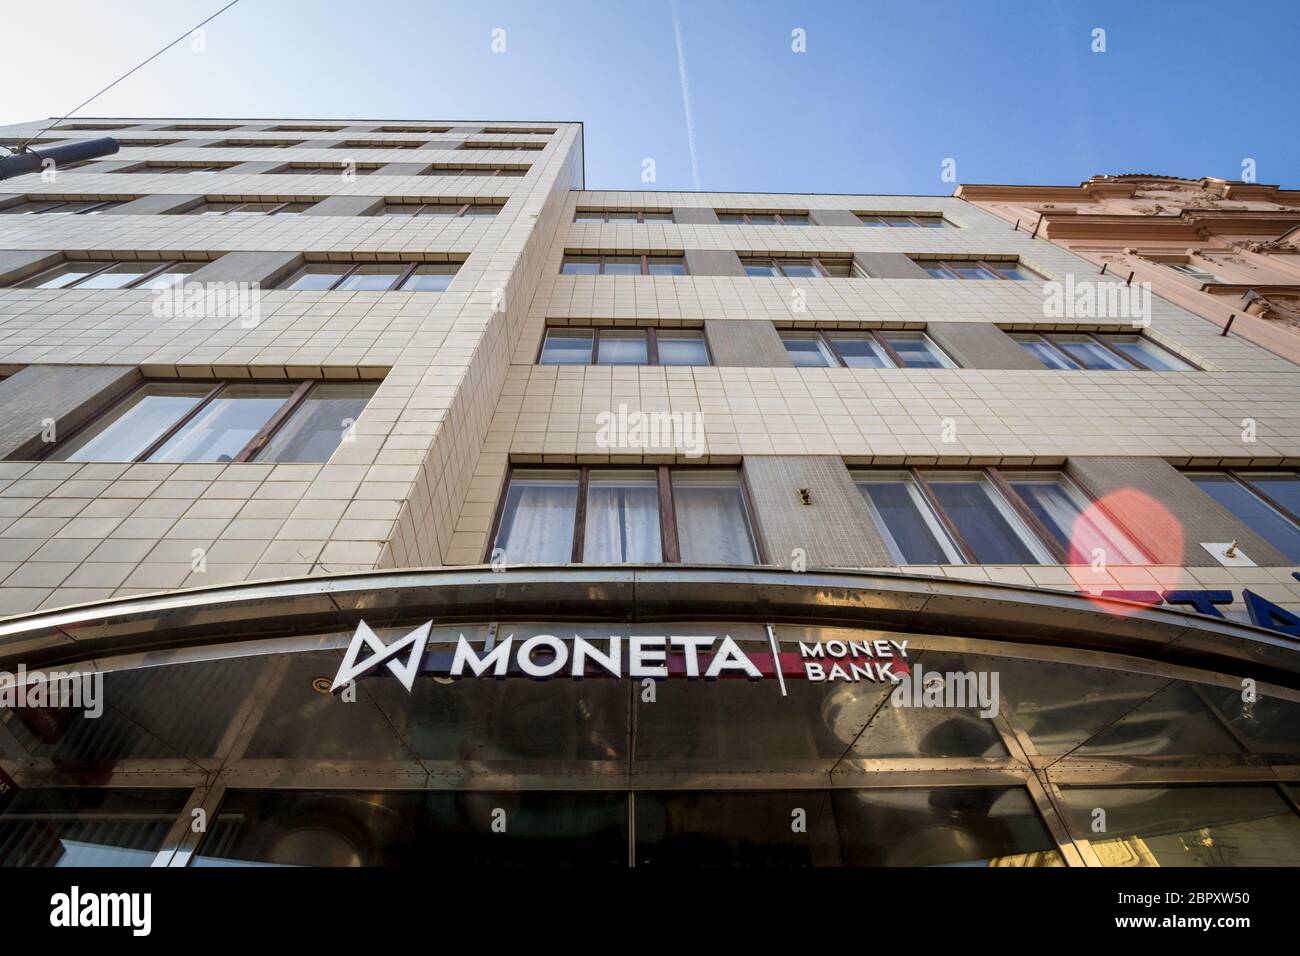 PRAGUE, CZECHIA - OCTOBER 31, 2019: Moneta Money Bank logo in front of their office for Prague. Moneta Money Bankis a Czech bank specialized in housin Stock Photo